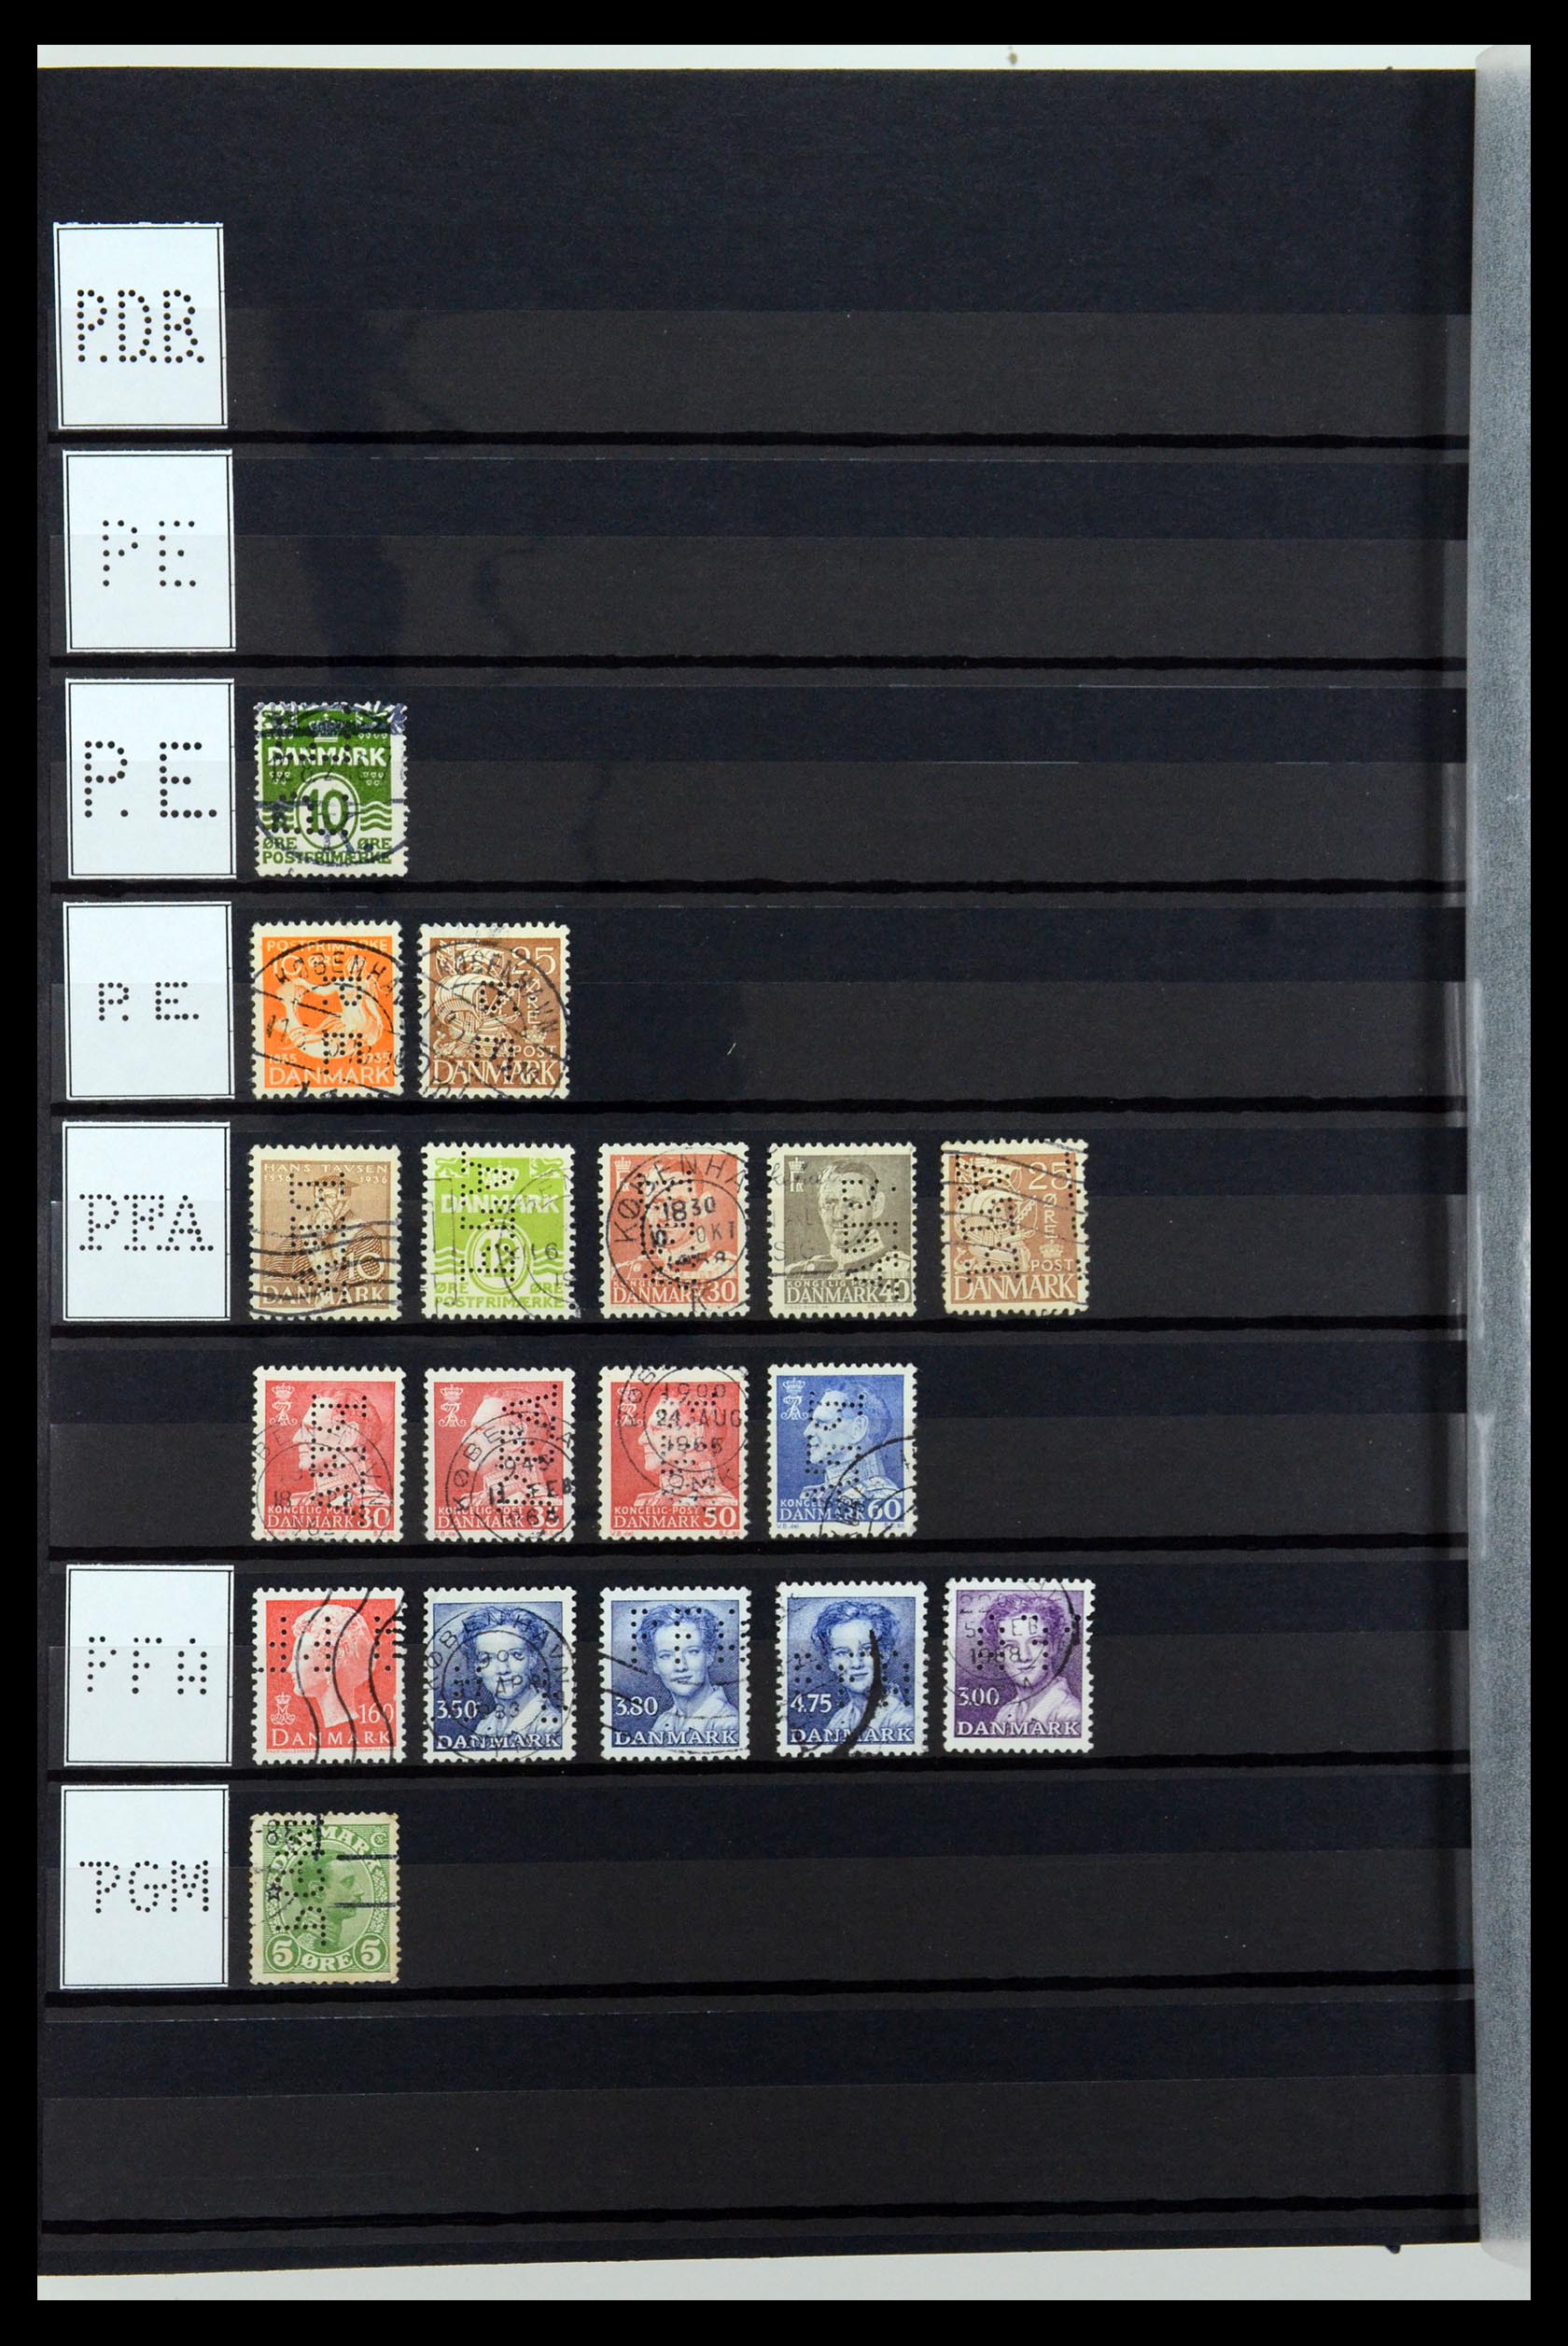 36396 191 - Stamp collection 36396 Denmark perfins.